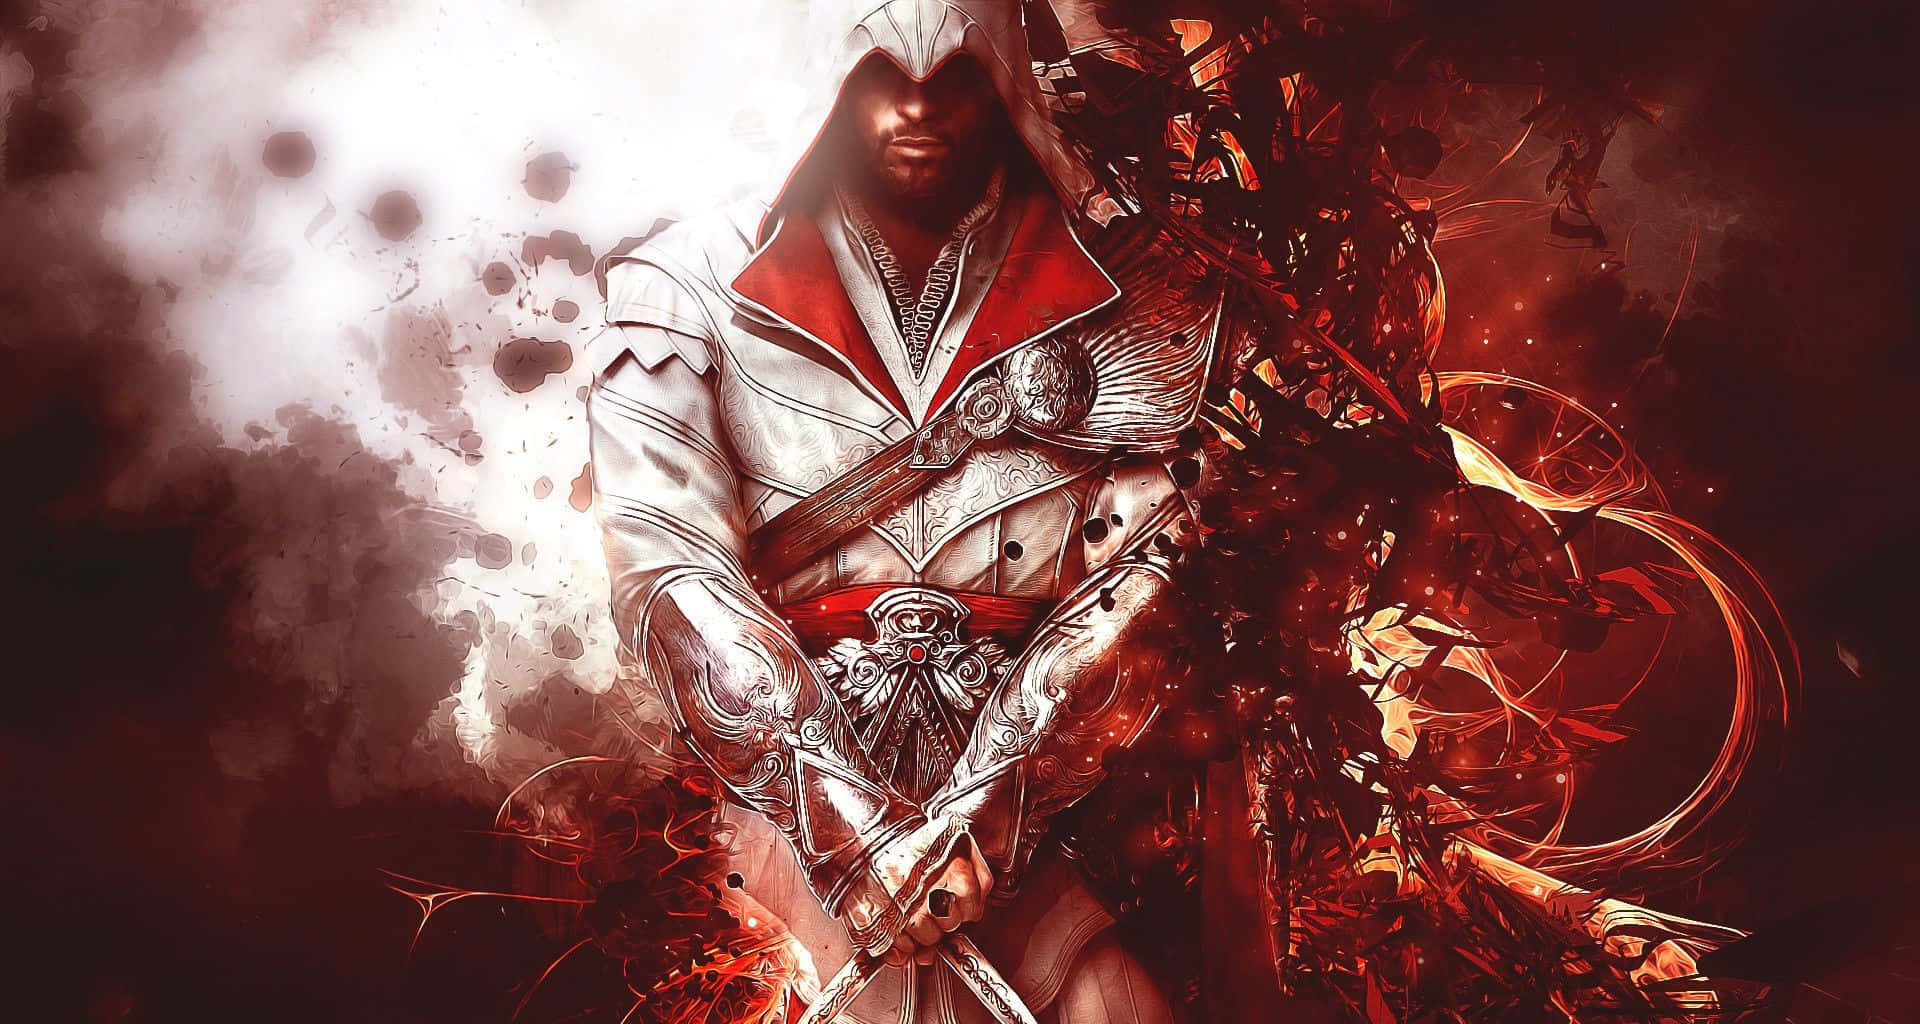 Assassin's Creed Brotherhood - Epic Game Scene Wallpaper